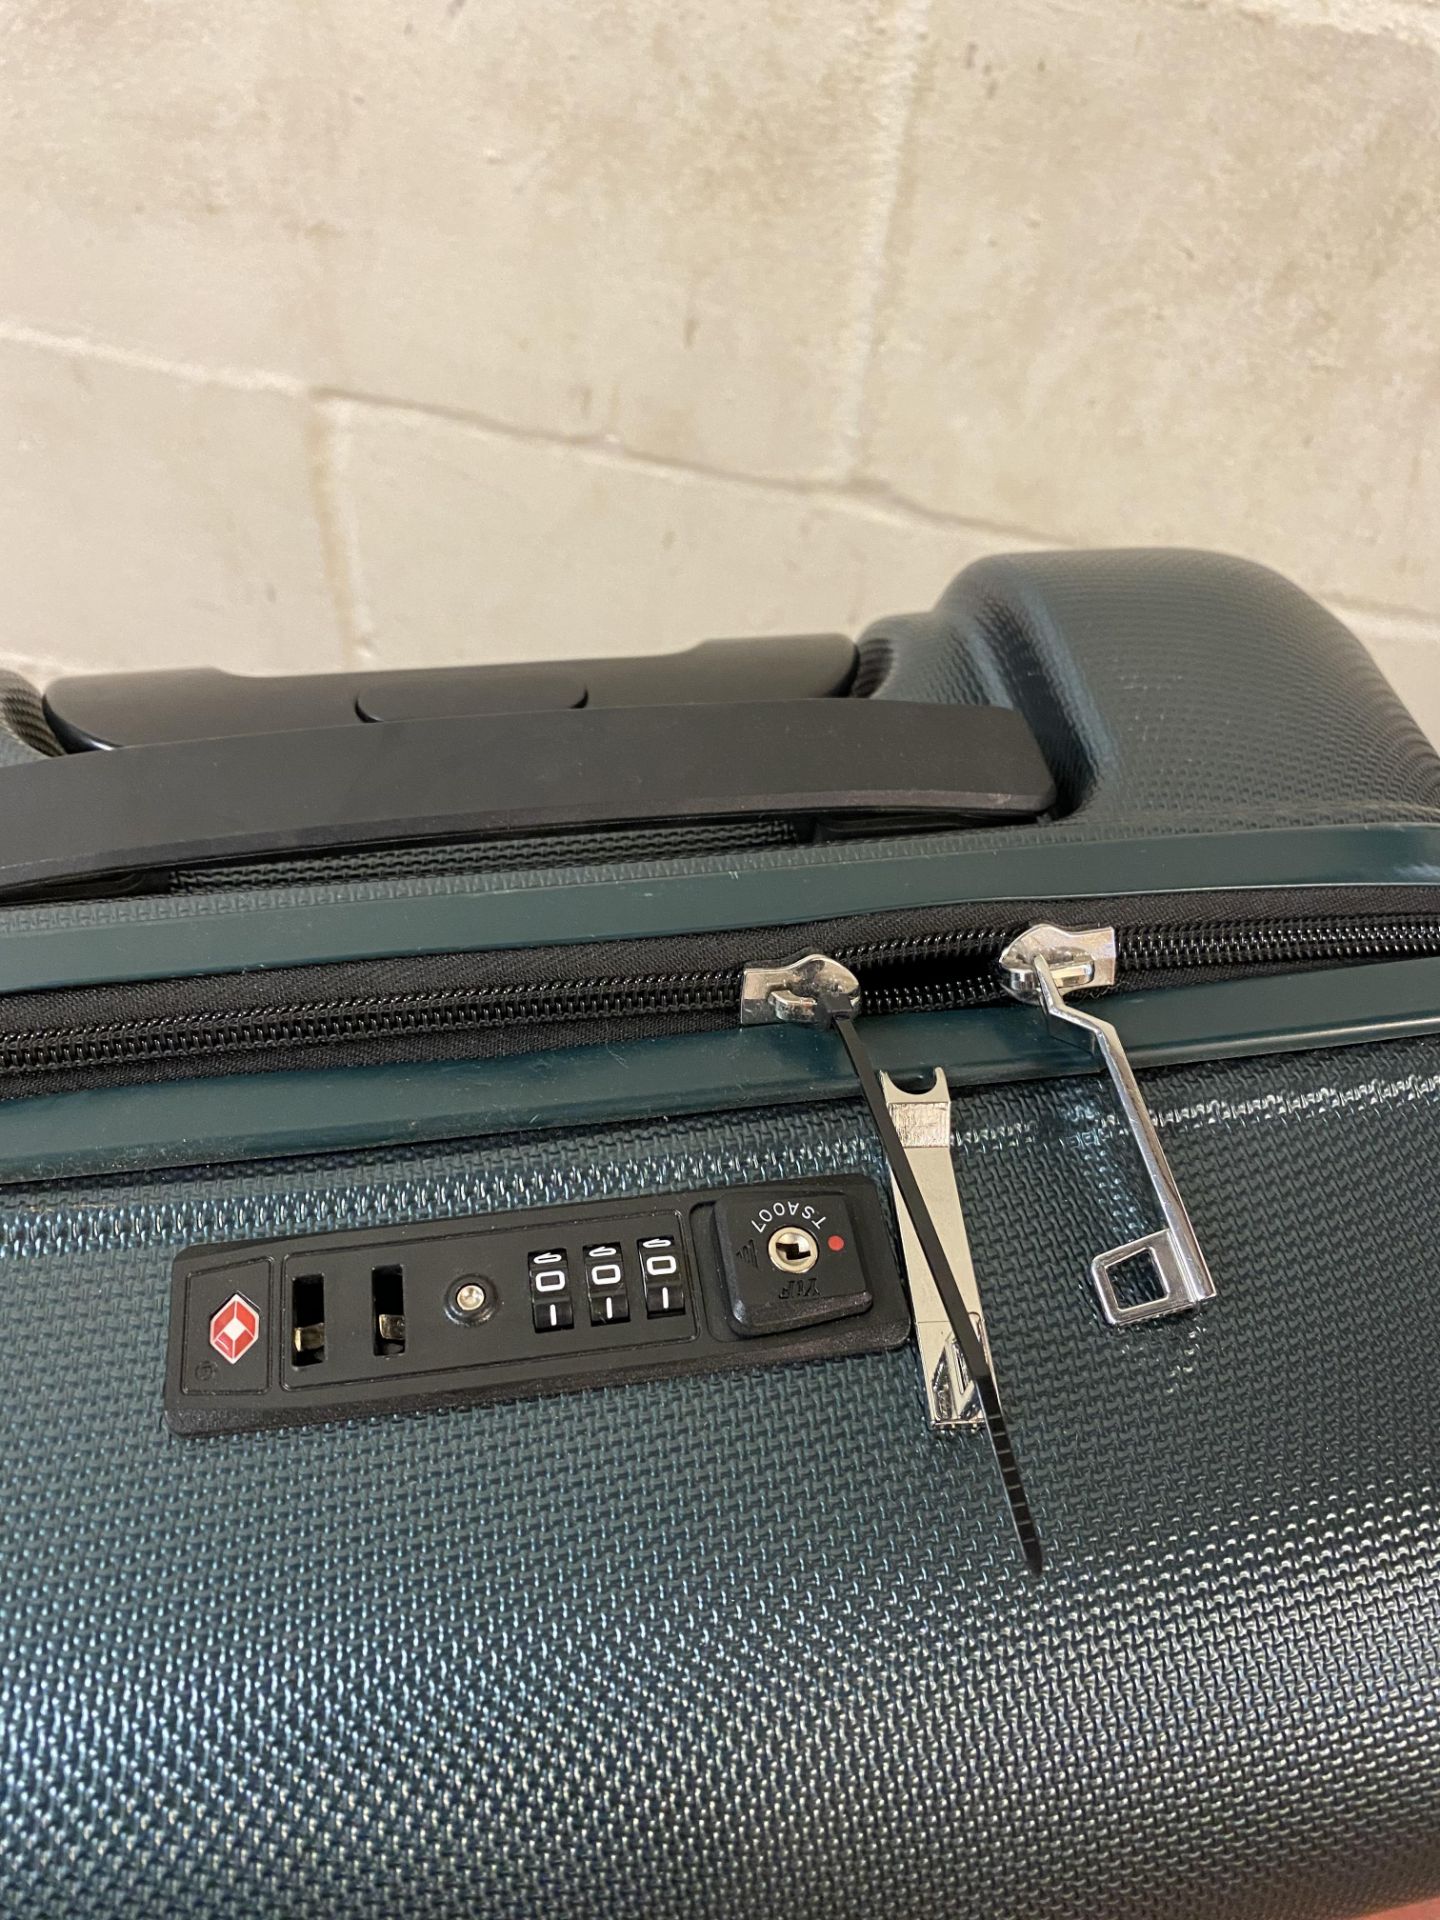 Heritage 8 Wheel Hard Shell Medium Suitcase (1 zip pull broken, see image) RRP £109 - Image 2 of 2